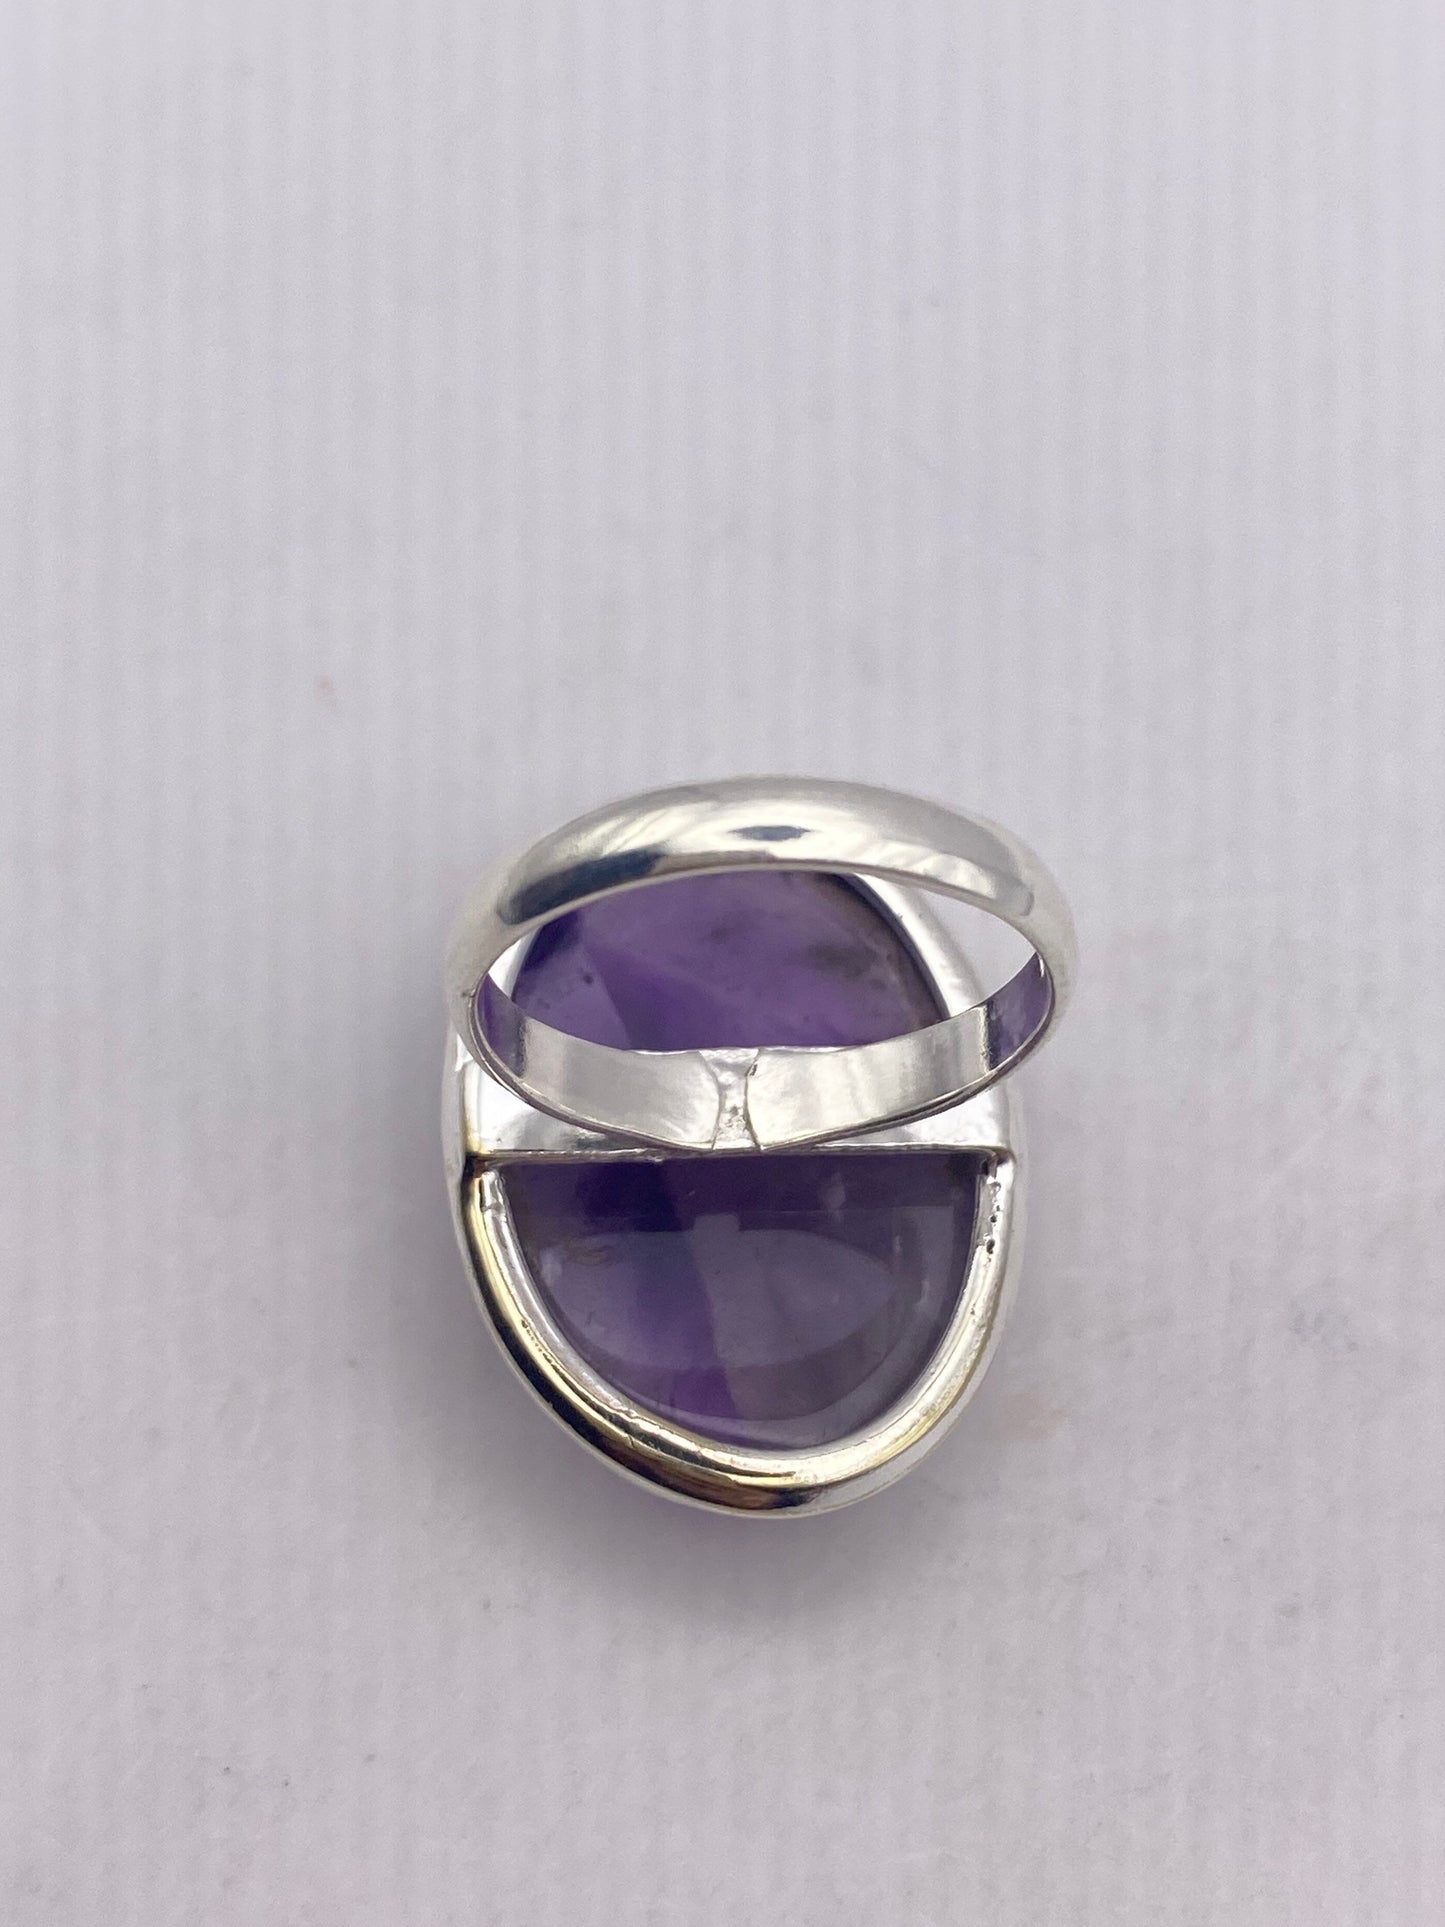 Vintage Boho Purple Amethyst Cocktail Ring Size 9